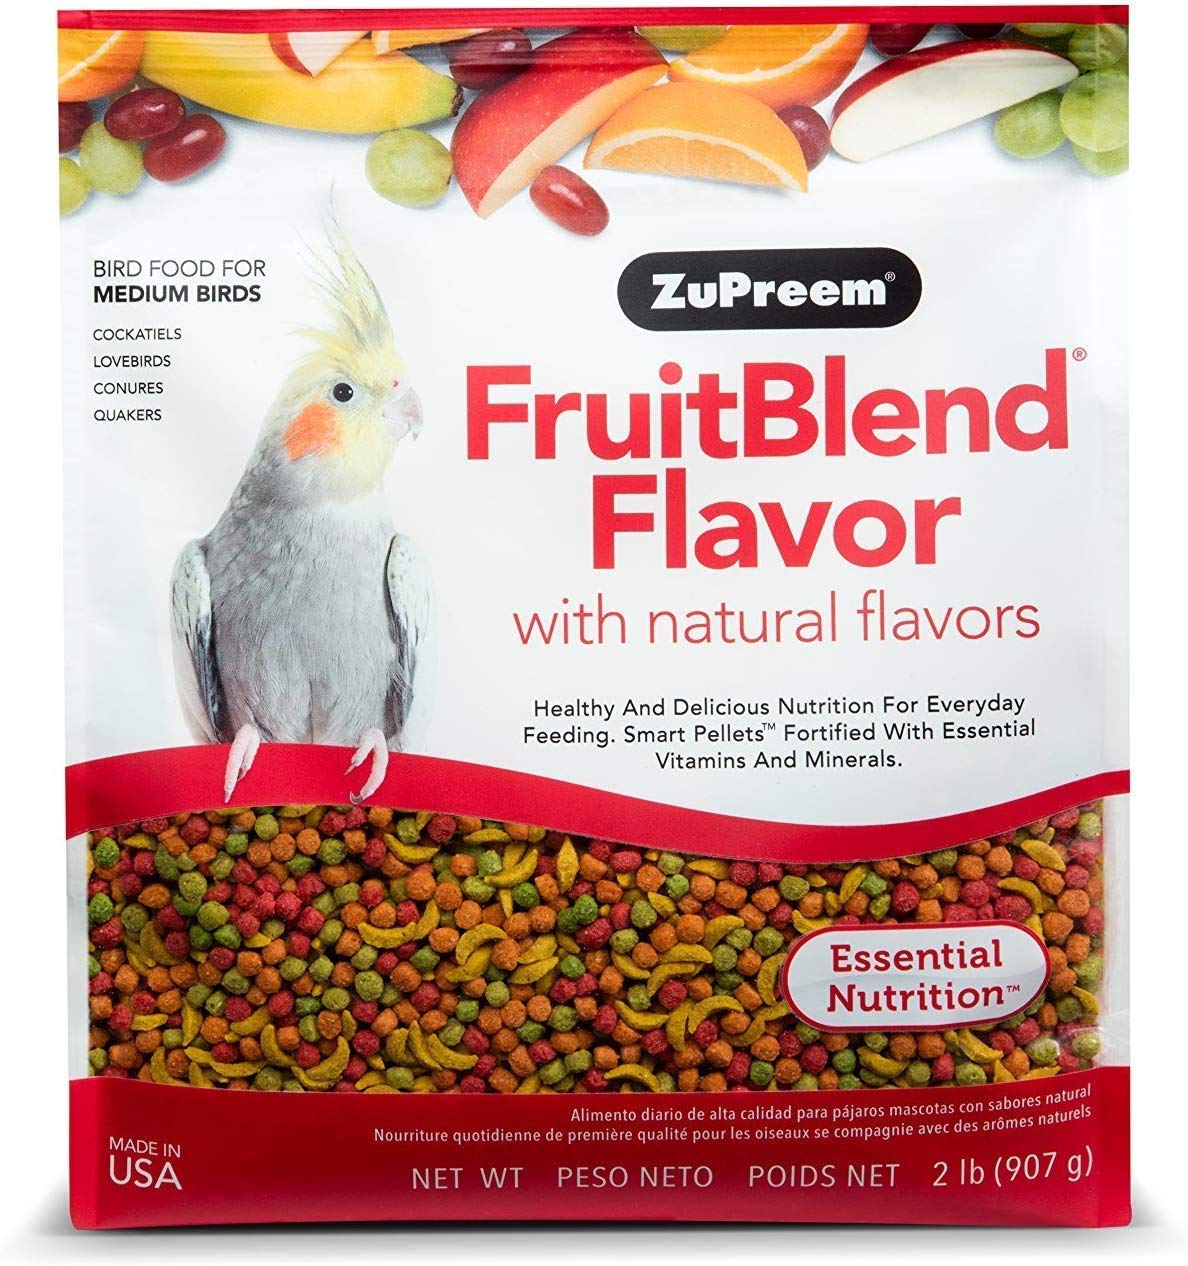  ZuPreem FruitBlend フレーバーペレット 中型鳥用バードフード (複数サイズ) - オカメインコ、クエーカー教徒、ラブバード、小型コニュア用のデイリー...